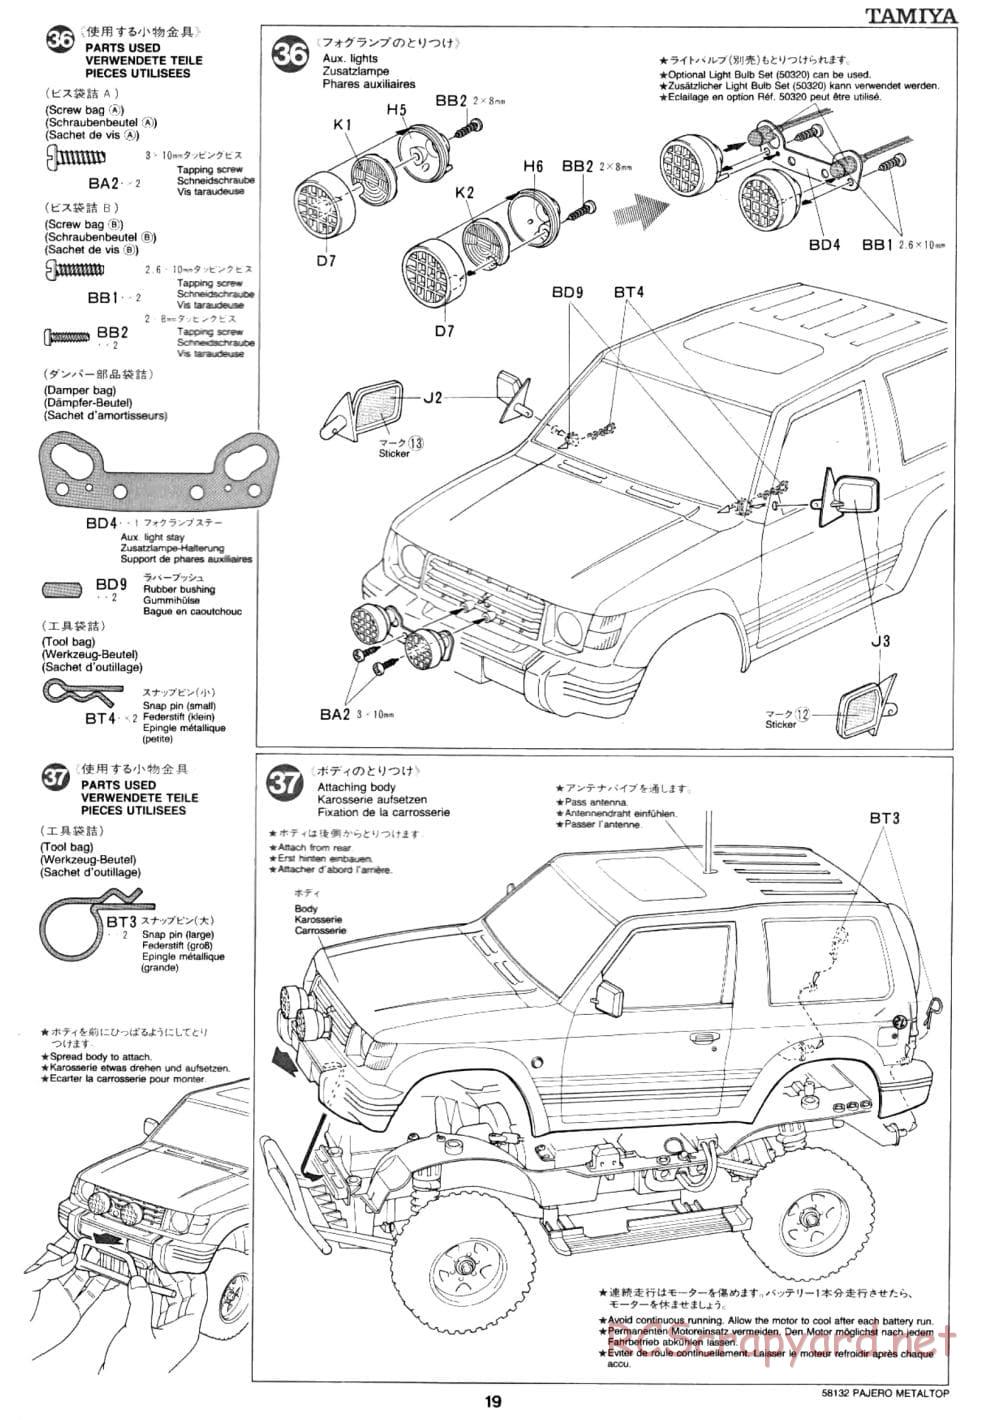 Tamiya - Mitsubishi Pajero Metaltop Wide - CC-01 Chassis - Manual - Page 19